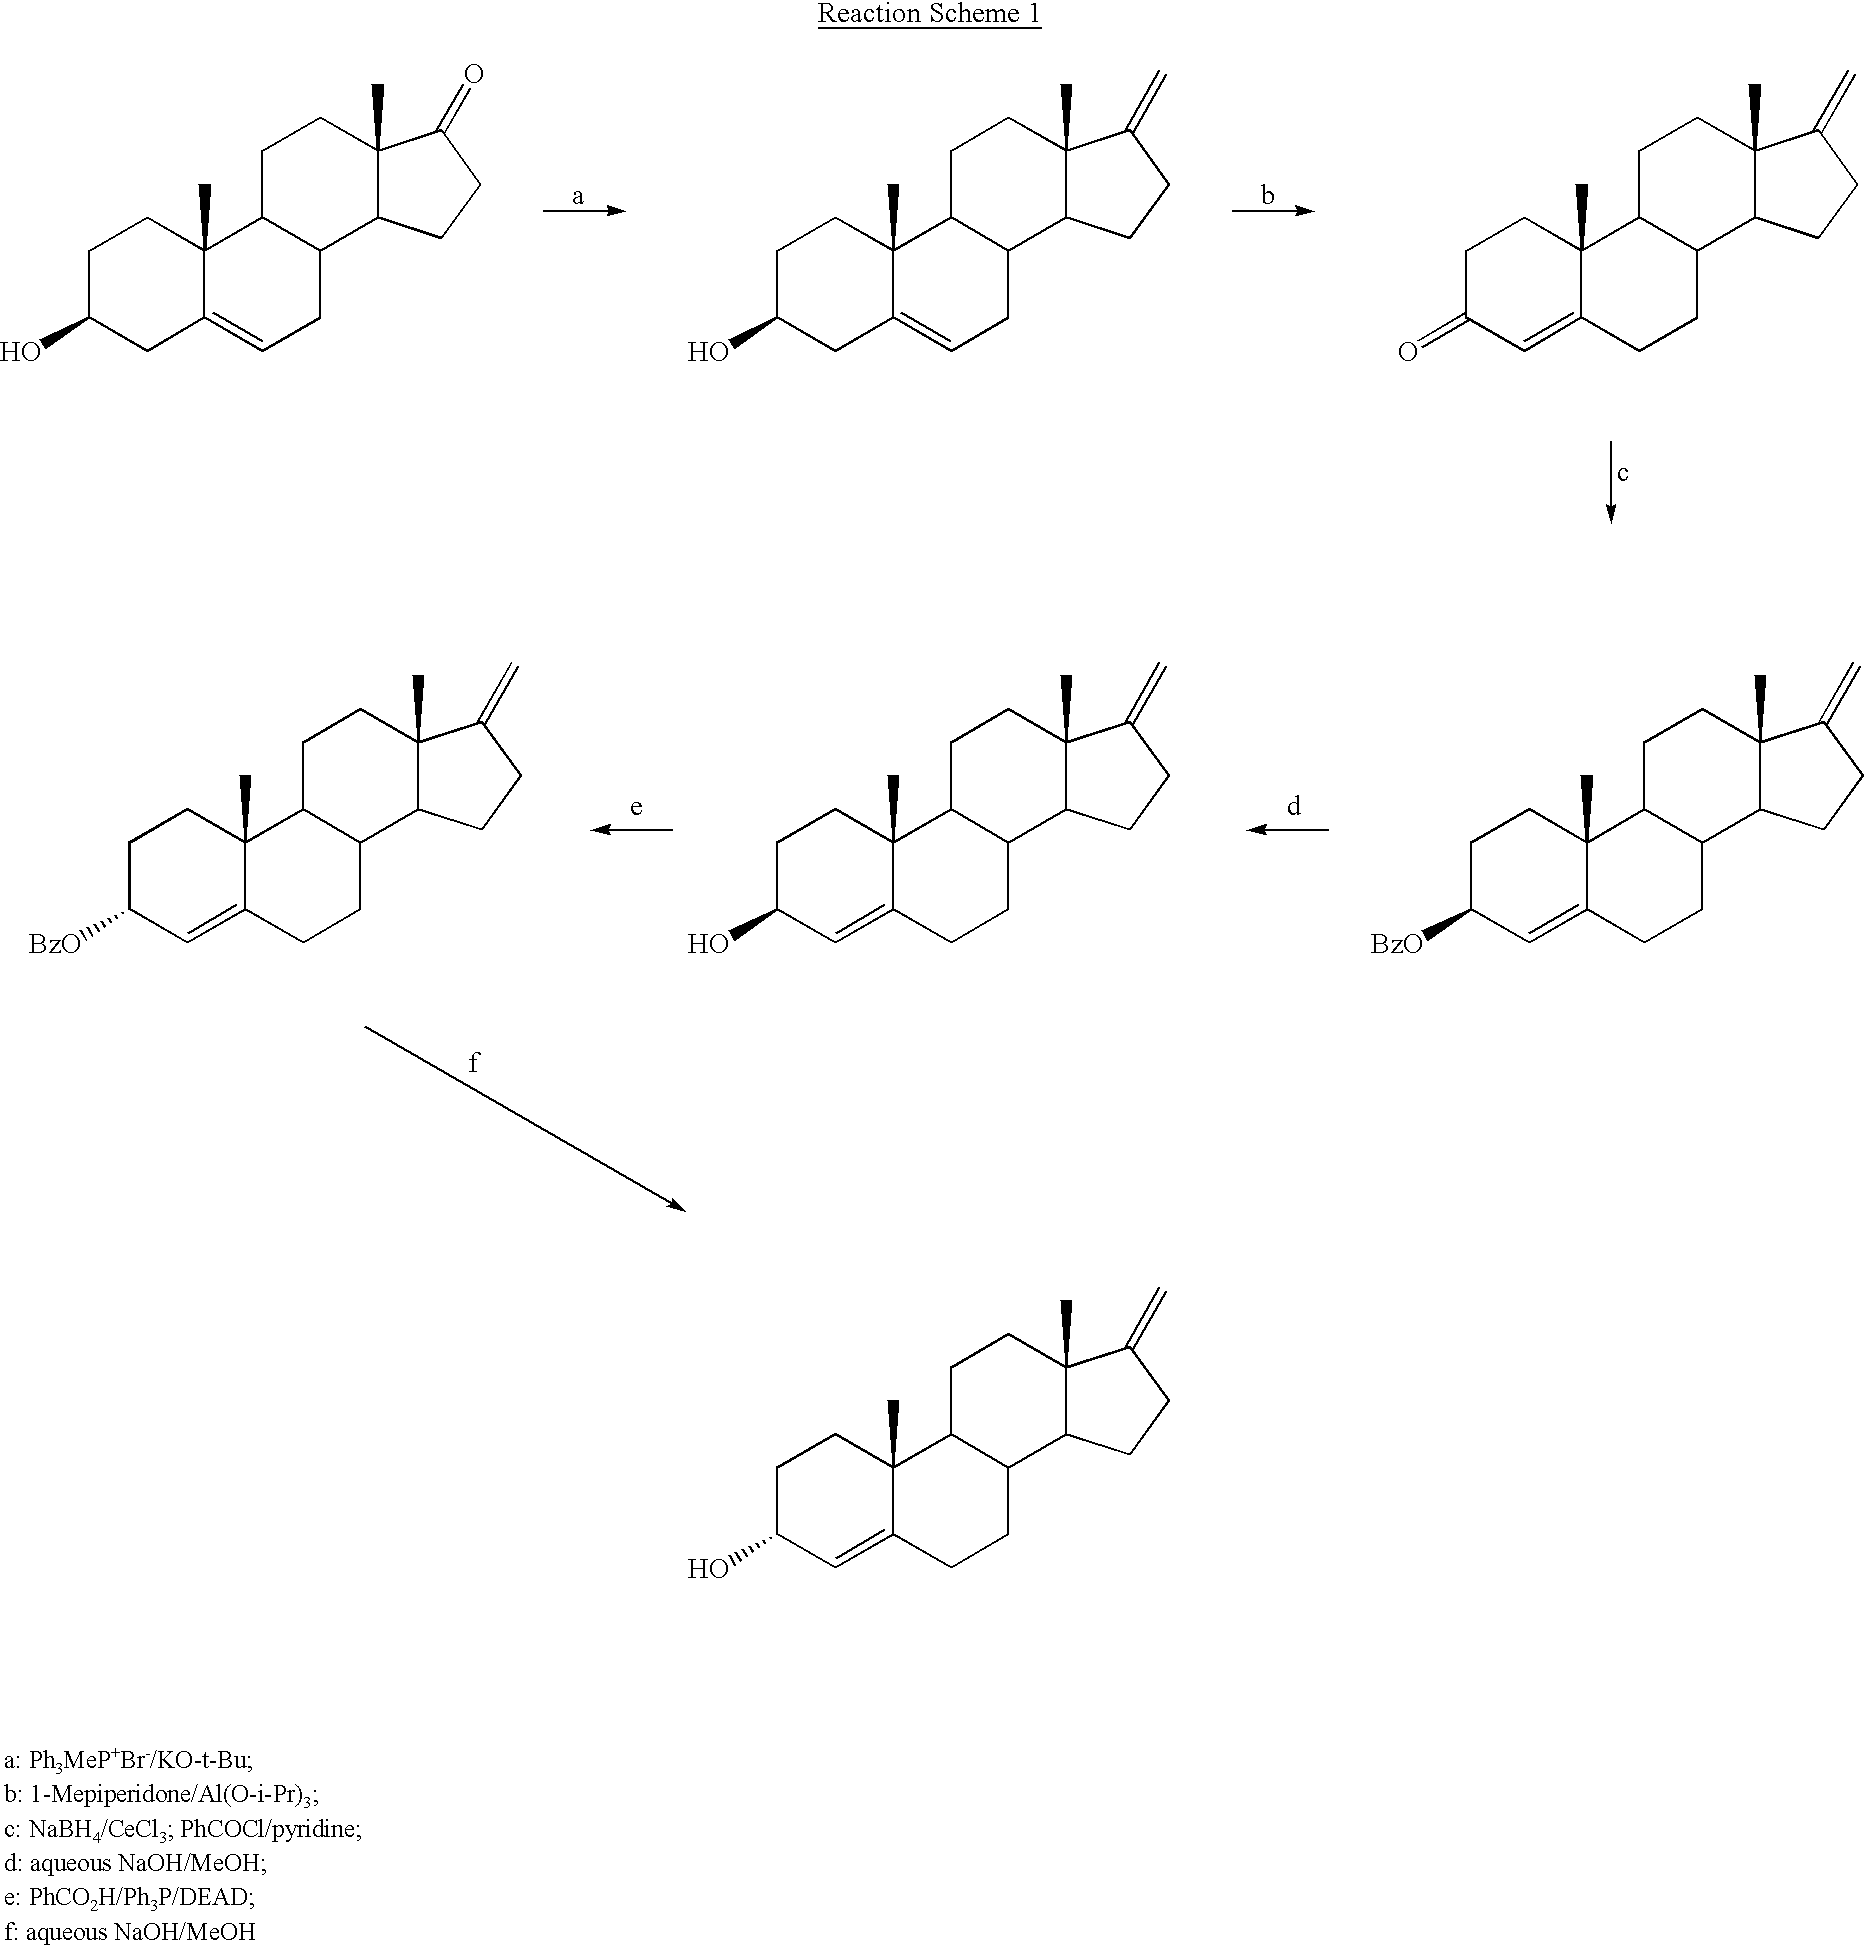 17-methylenandrostan-3alpha-ol analogs as CRH inhibitors